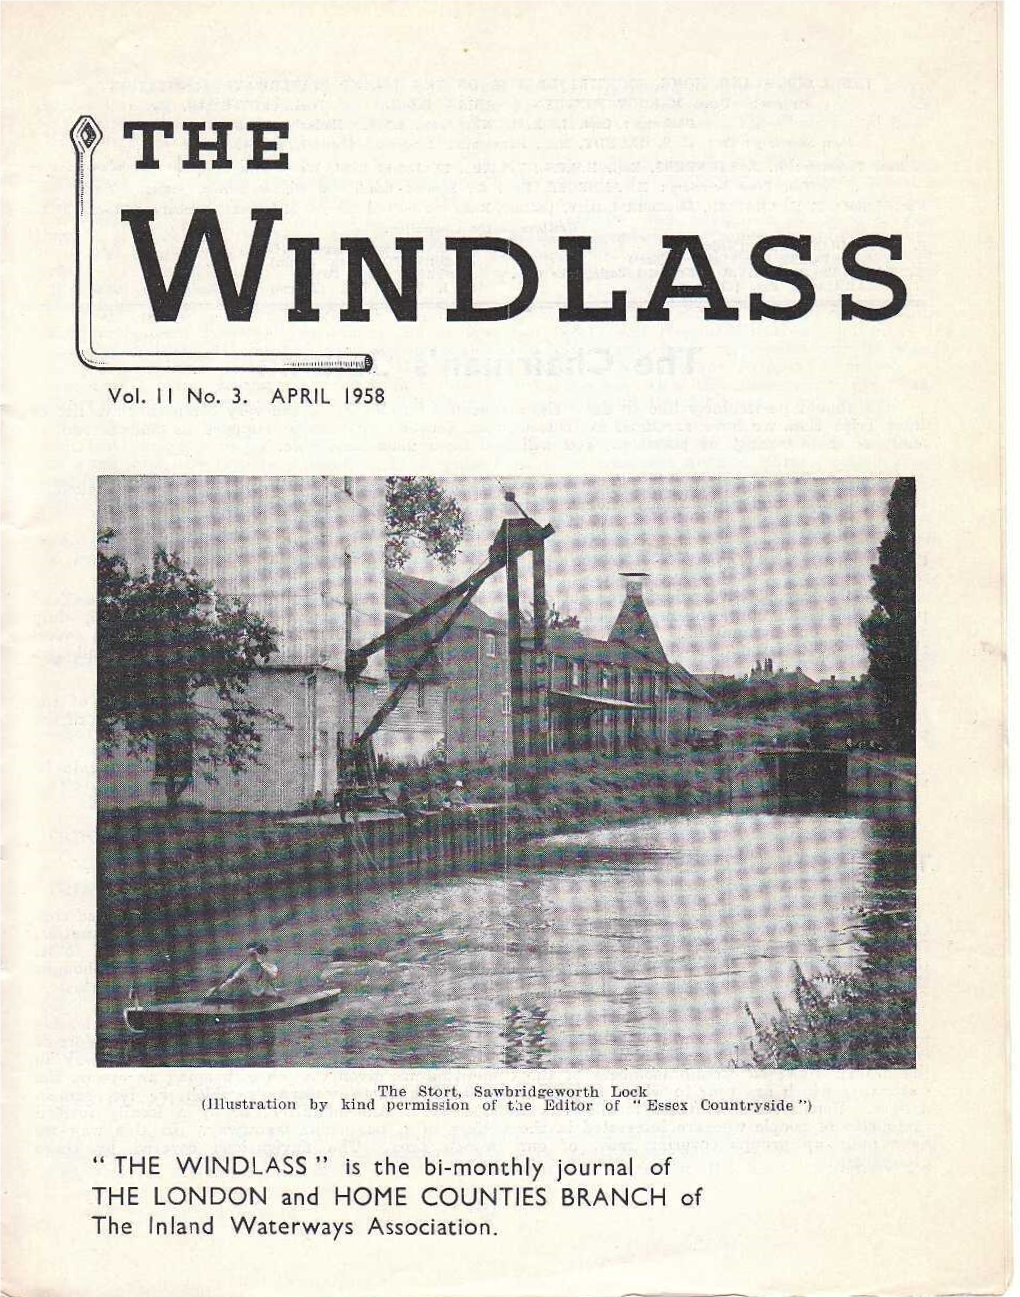 Windlass No. 9 Volume II No.3 April 1958